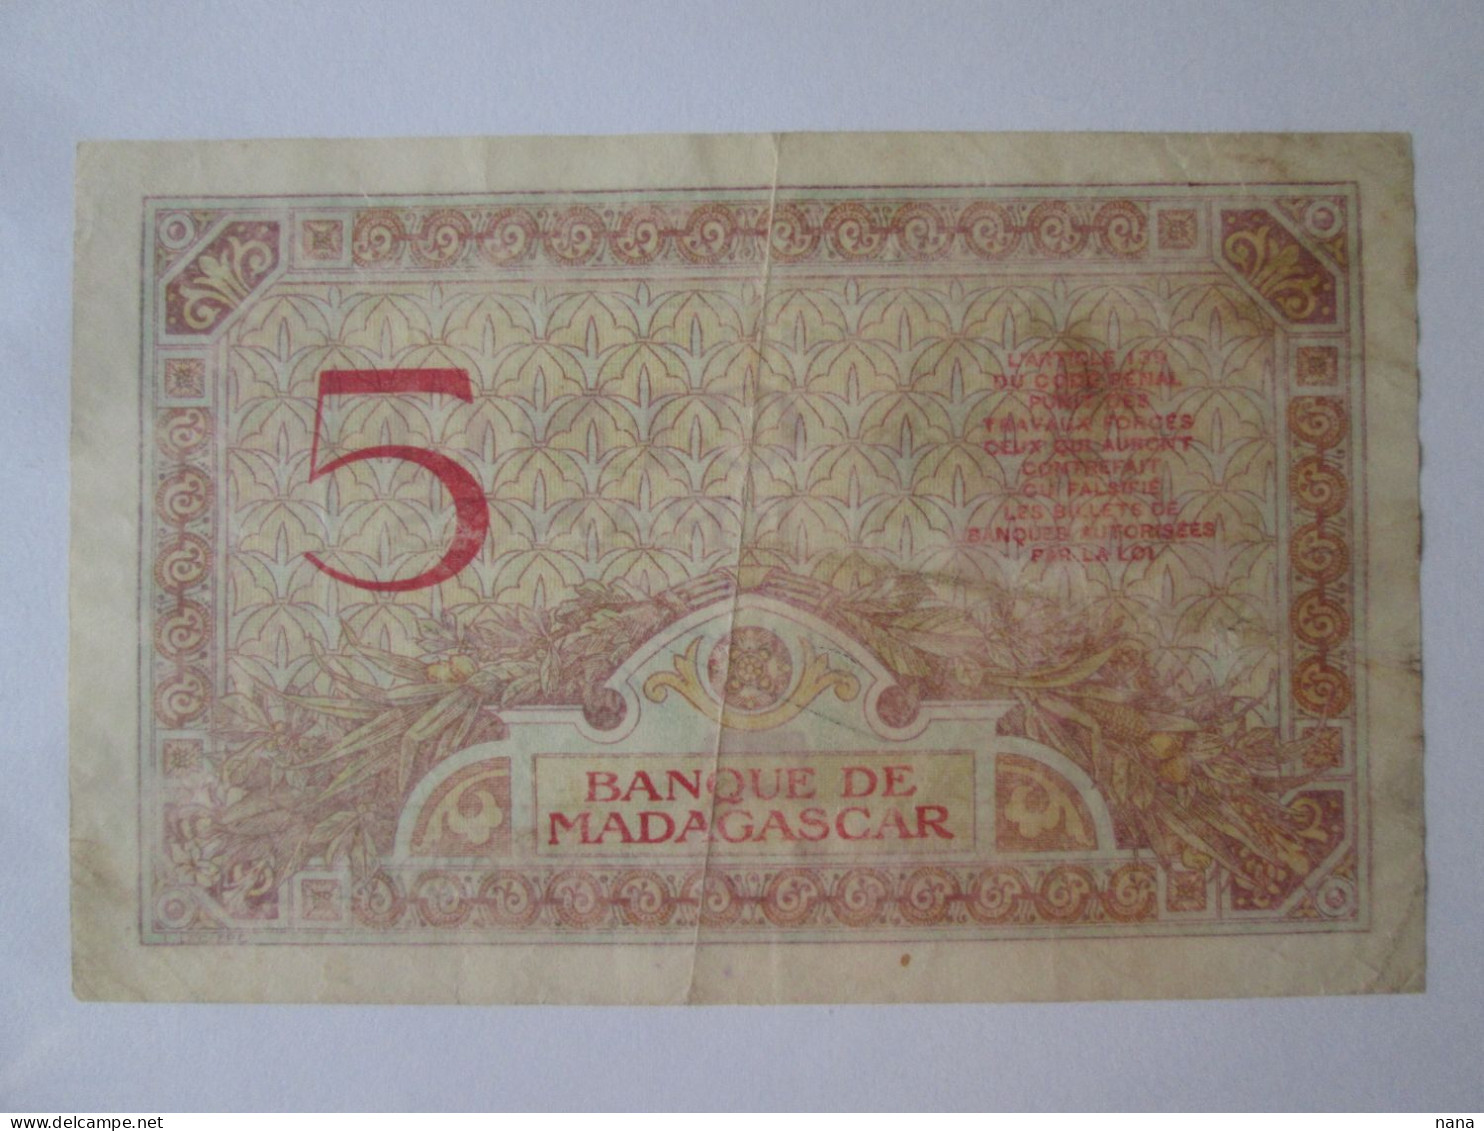 Madagascar 5 Francs 1937 Banknote,see Pictures - Madagascar